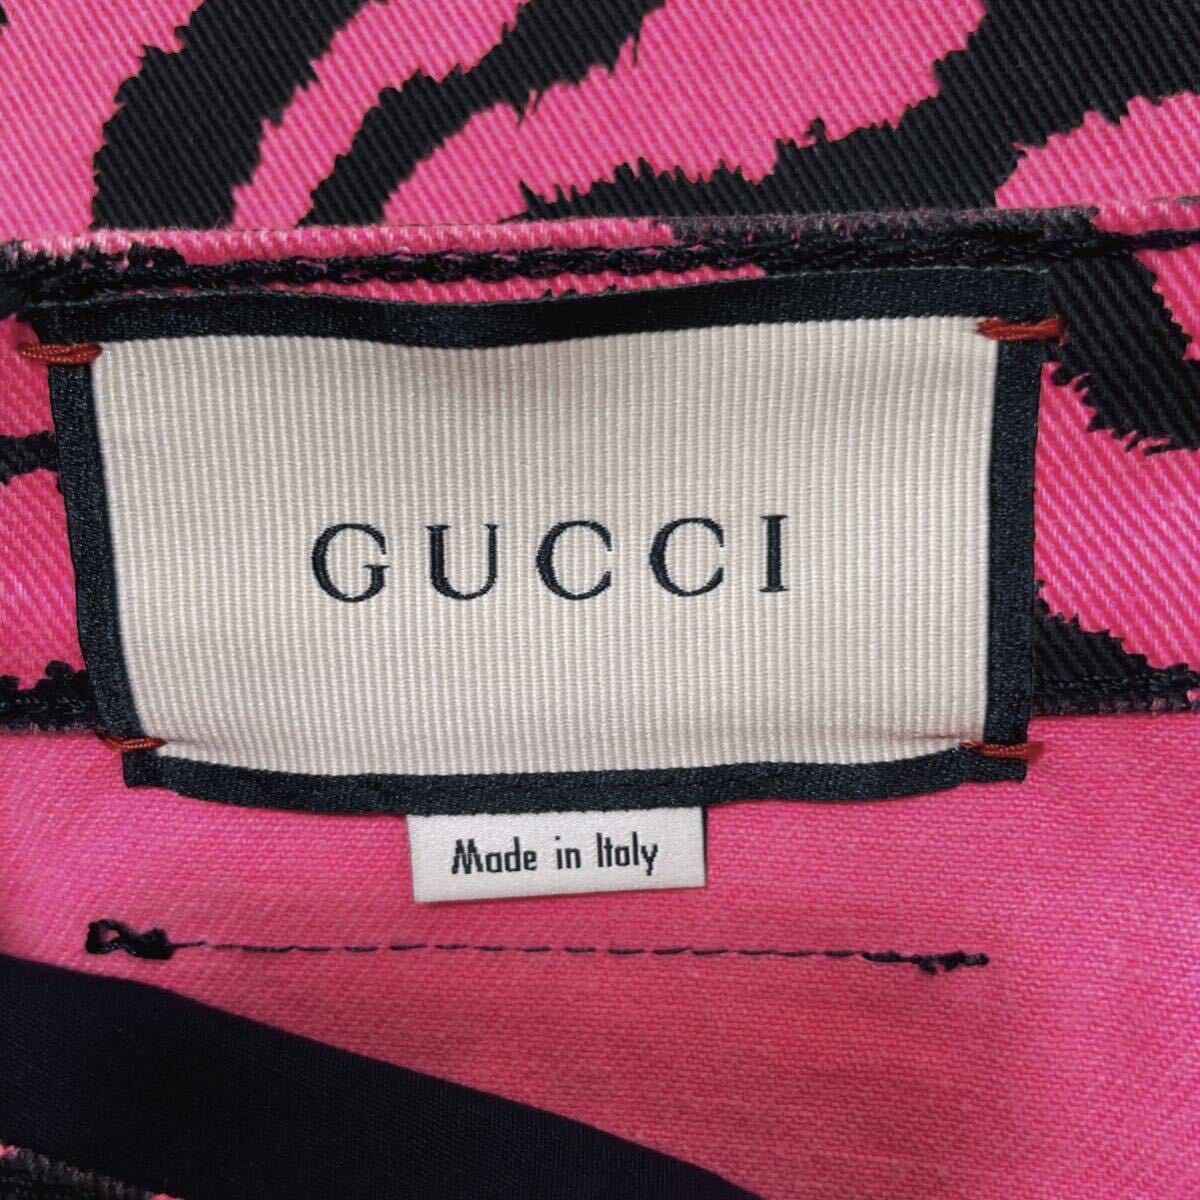  ultimate beautiful goods GUCCI Gucci Denim pants skinny bi bit pink colorful animal pattern 